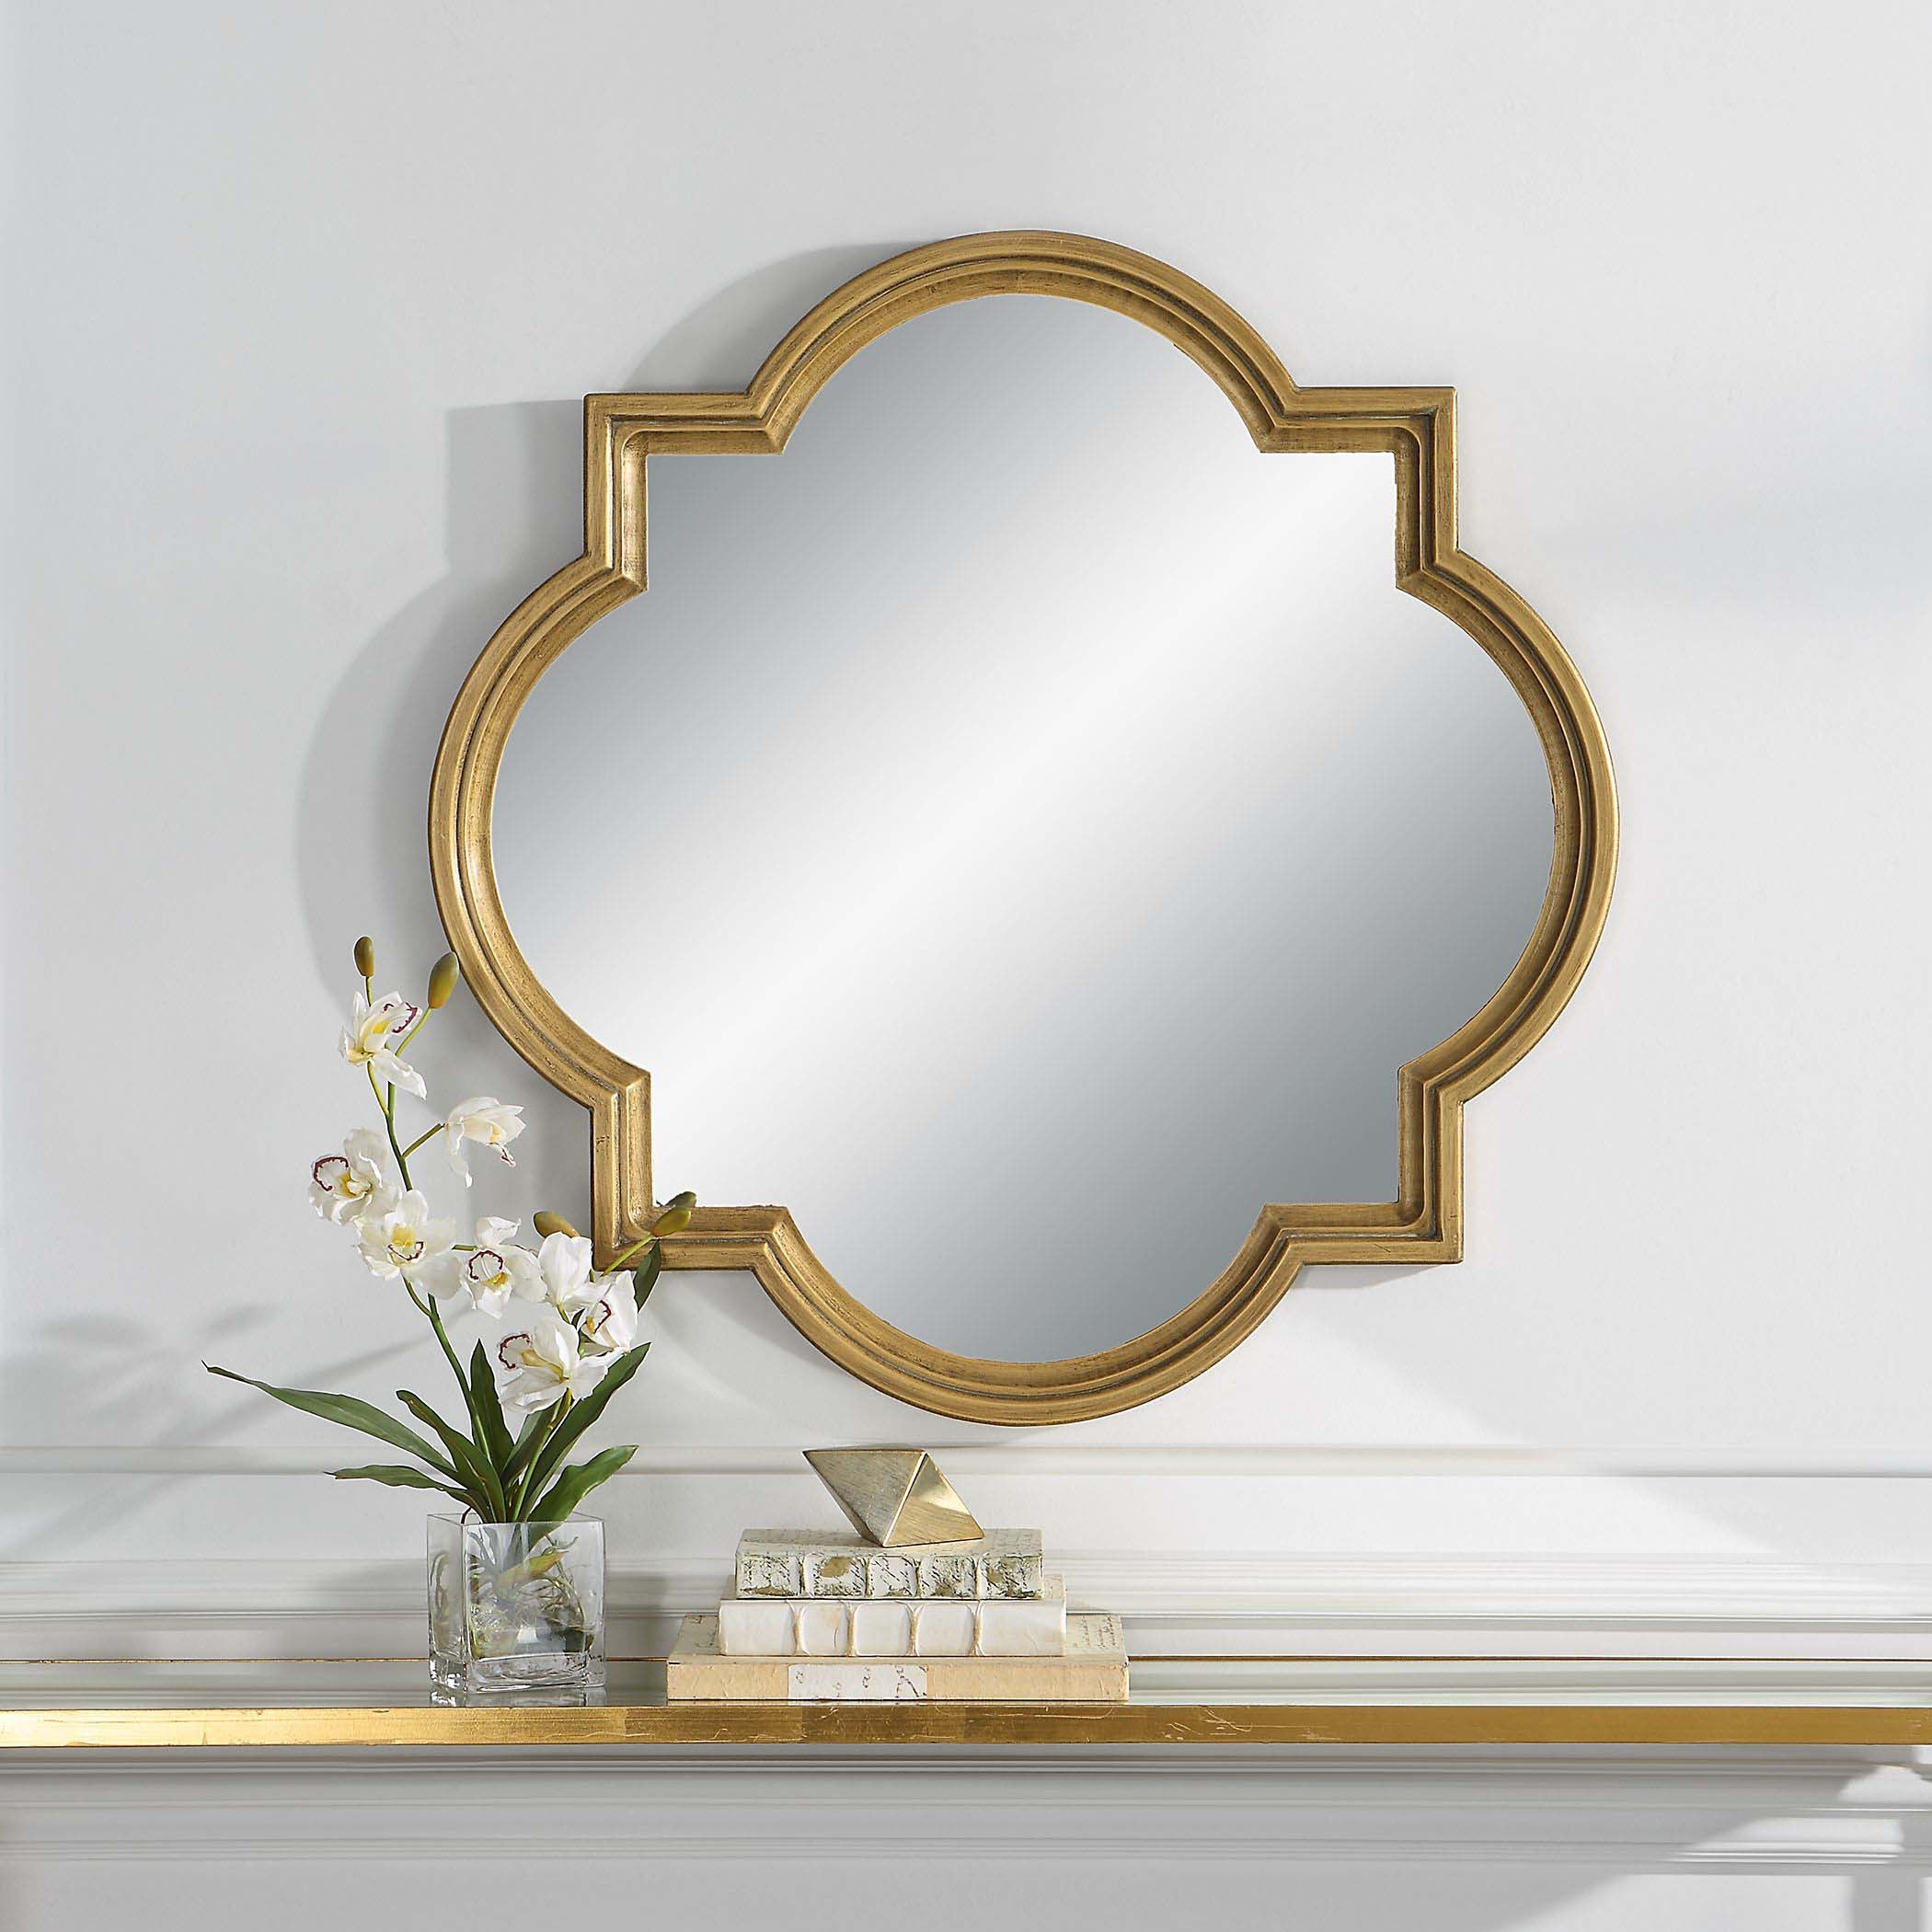 Decor Market Mirror - Gold With Gray Glaze